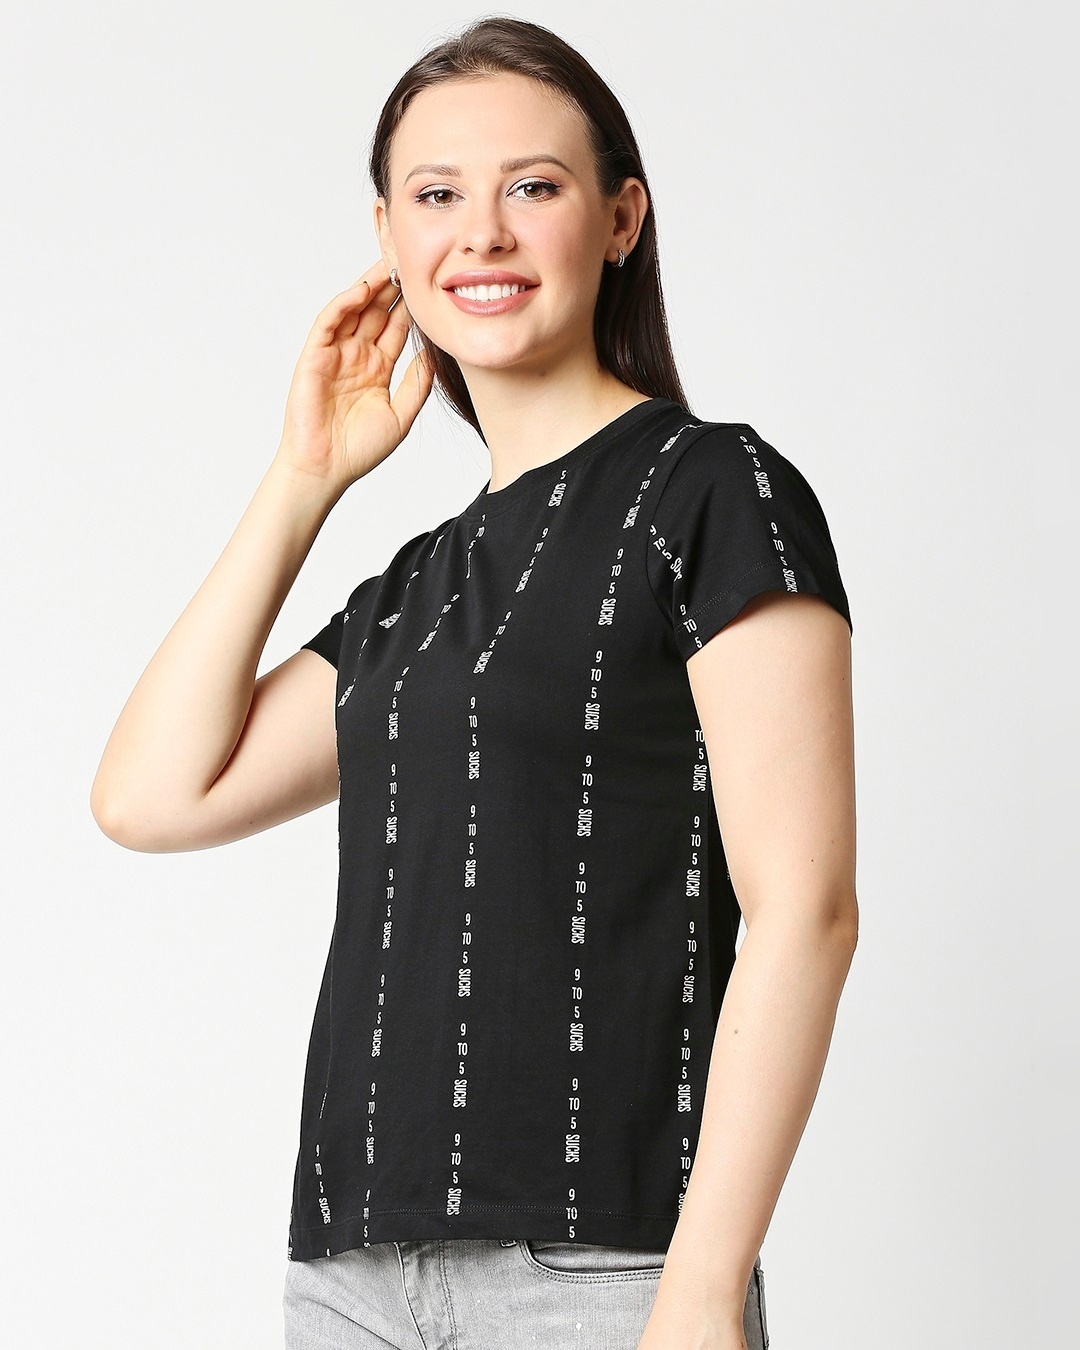 Shop Job Insanity All Over Printed Women Half Sleeve Black T-Shirt-Design